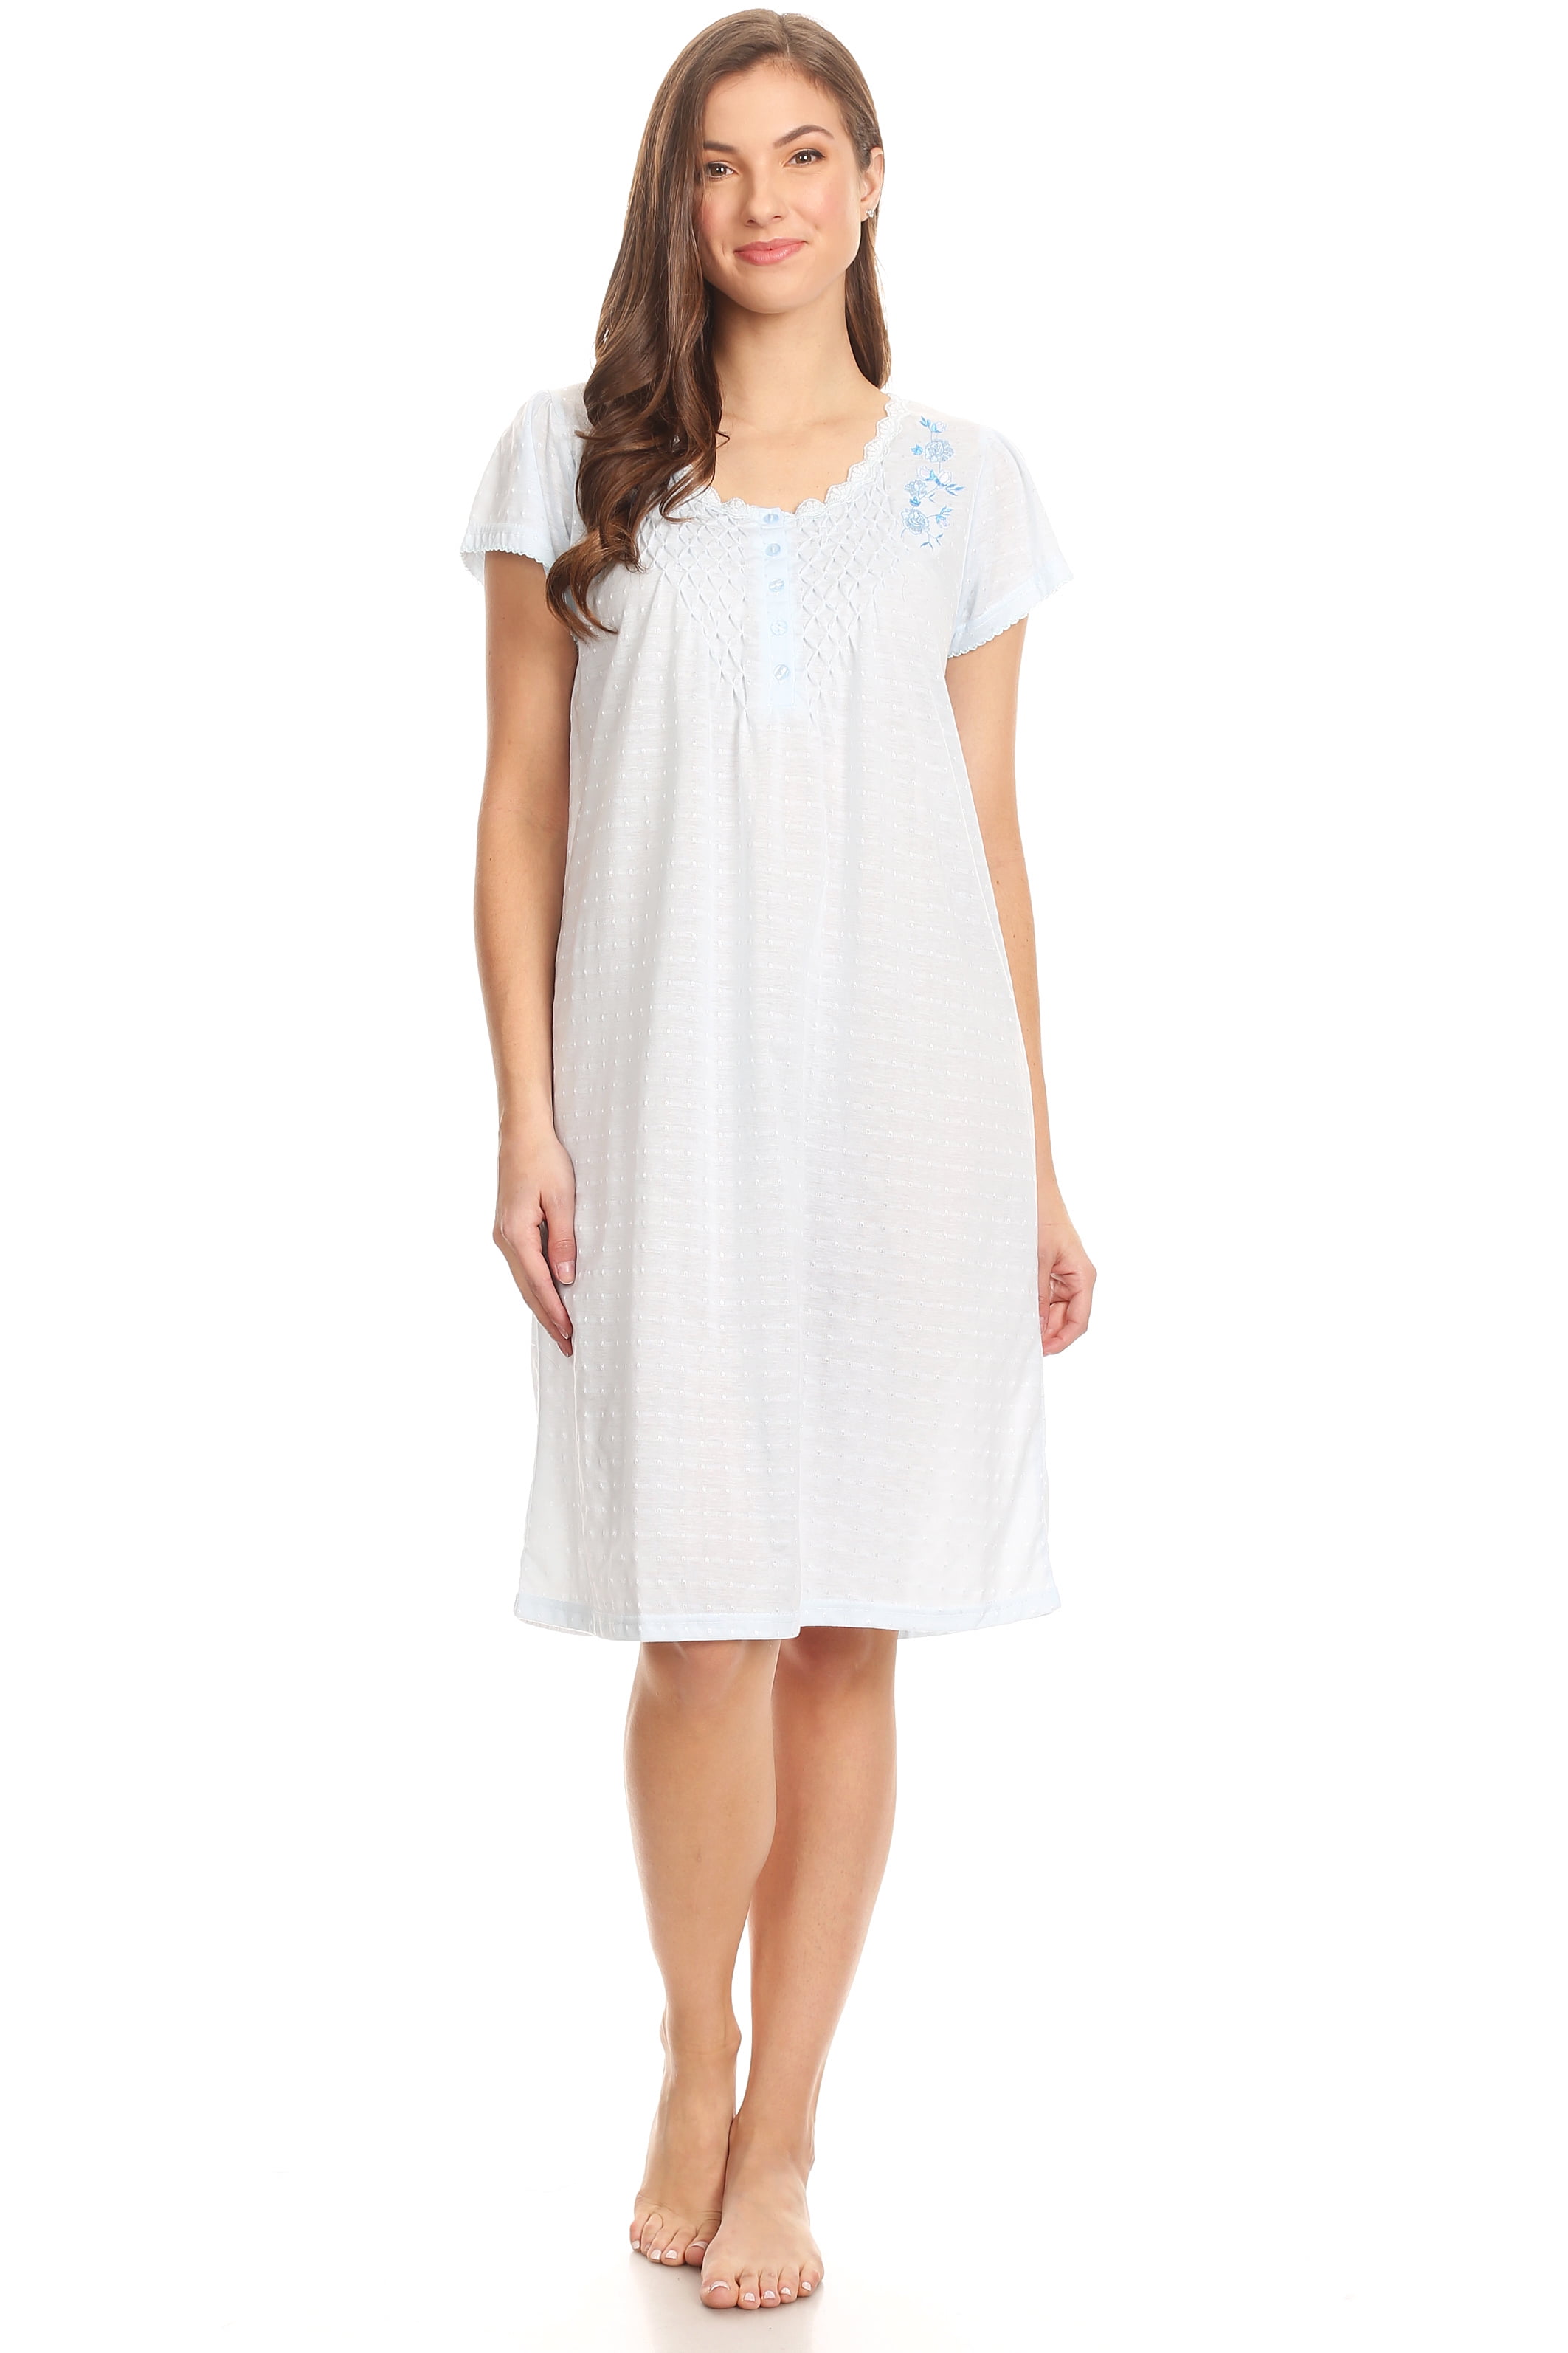 Womens Nightgown Sleepwear Pajamas - Woman Sleeveless Sleep Dress ...